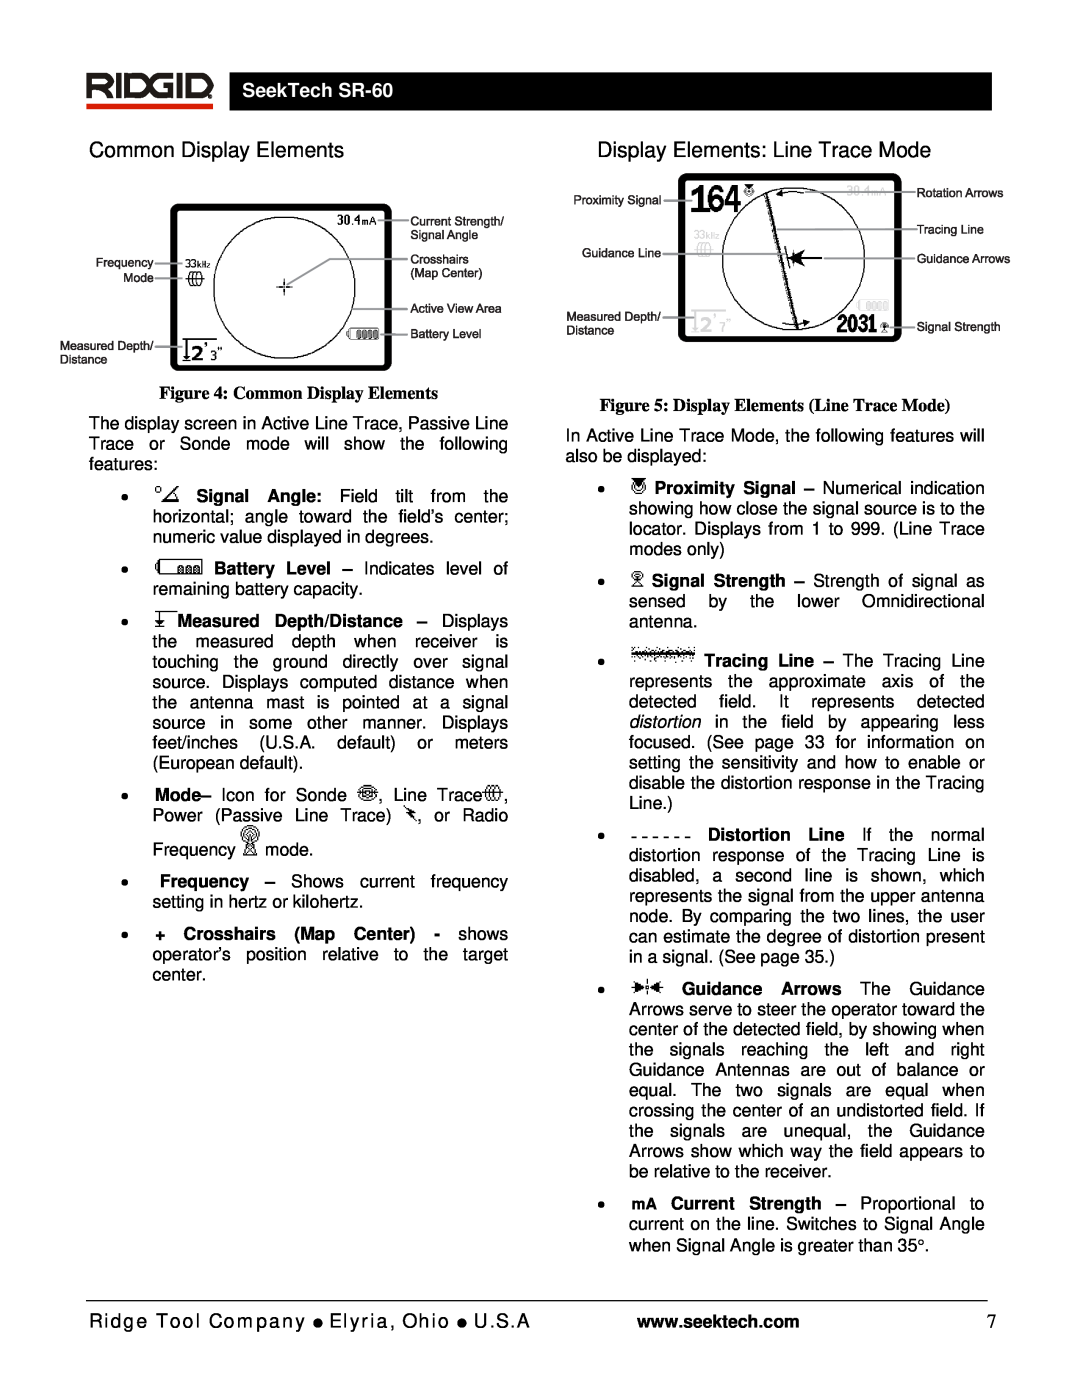 RIDGID manual Common Display Elements, Display Elements Line Trace Mode, SeekTech SR-60 